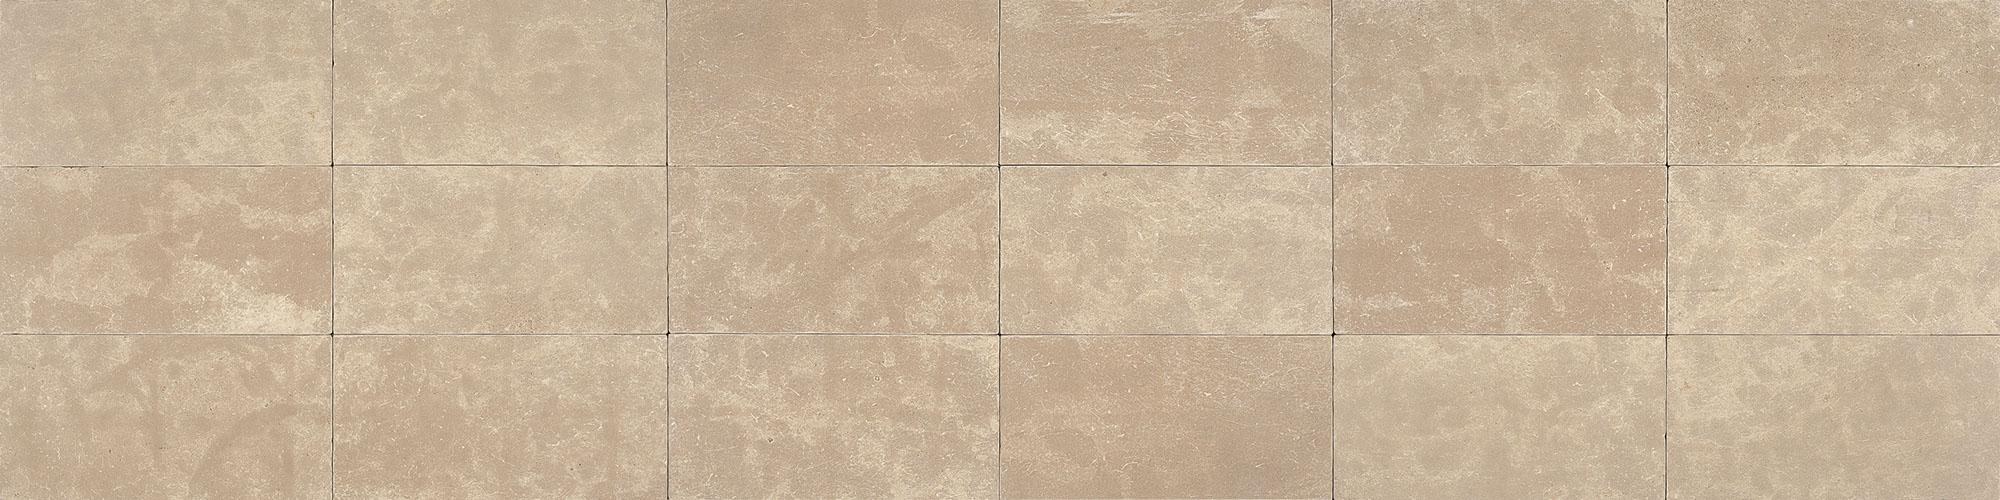 Corton Sable Limestone Tile 12x24 Tumbled   3/8 inch